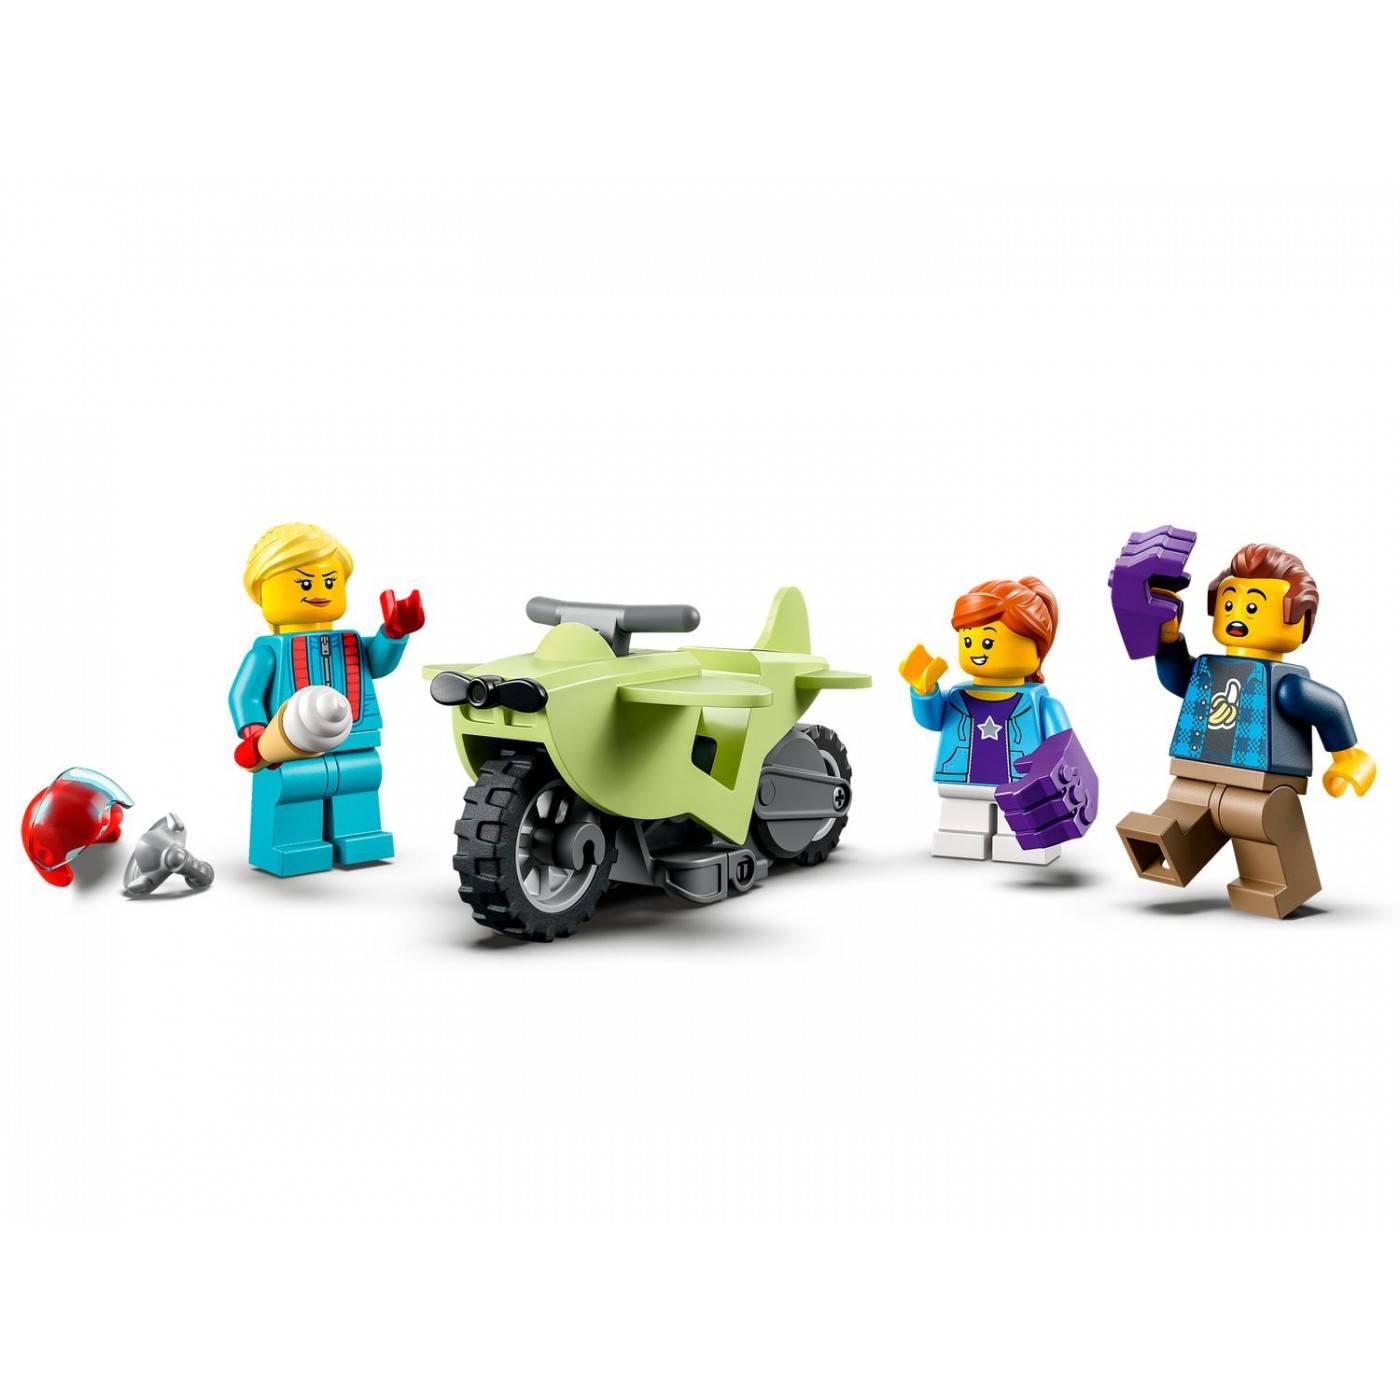 LEGO 60338 SMASHING CHIMPANZEE STUNT LOOP